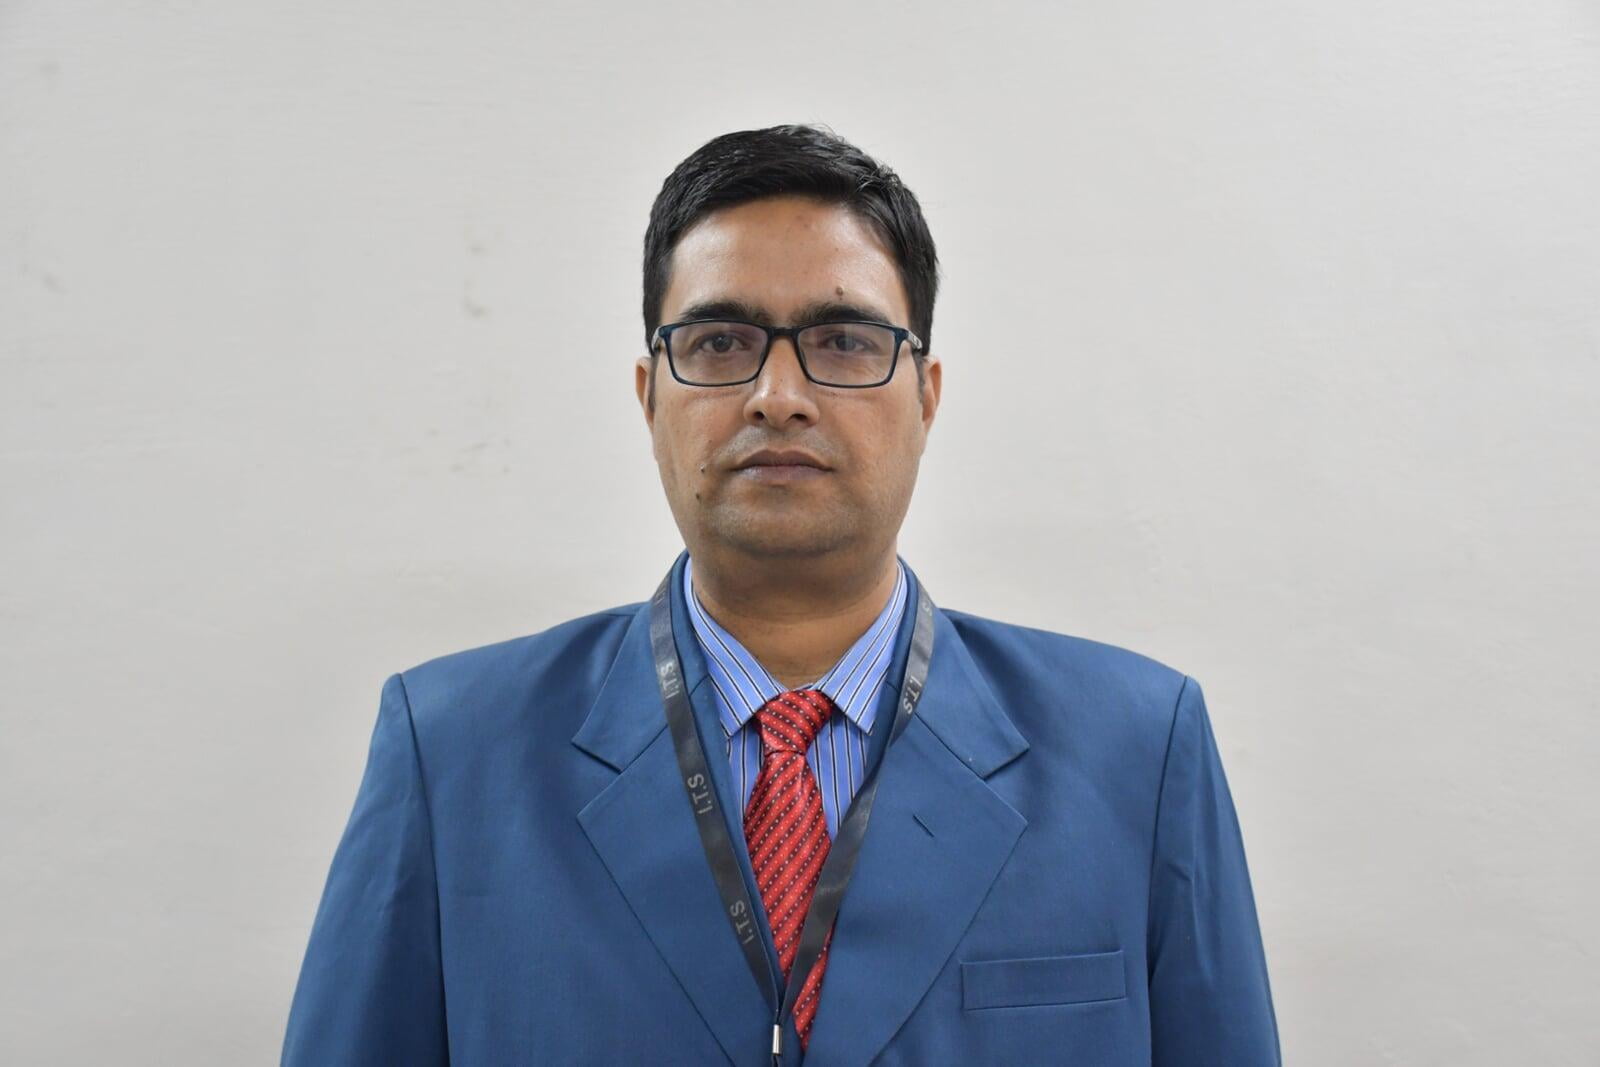 Mr. Bhupesh Ojha Mechanical Engineering Faculty at ITS